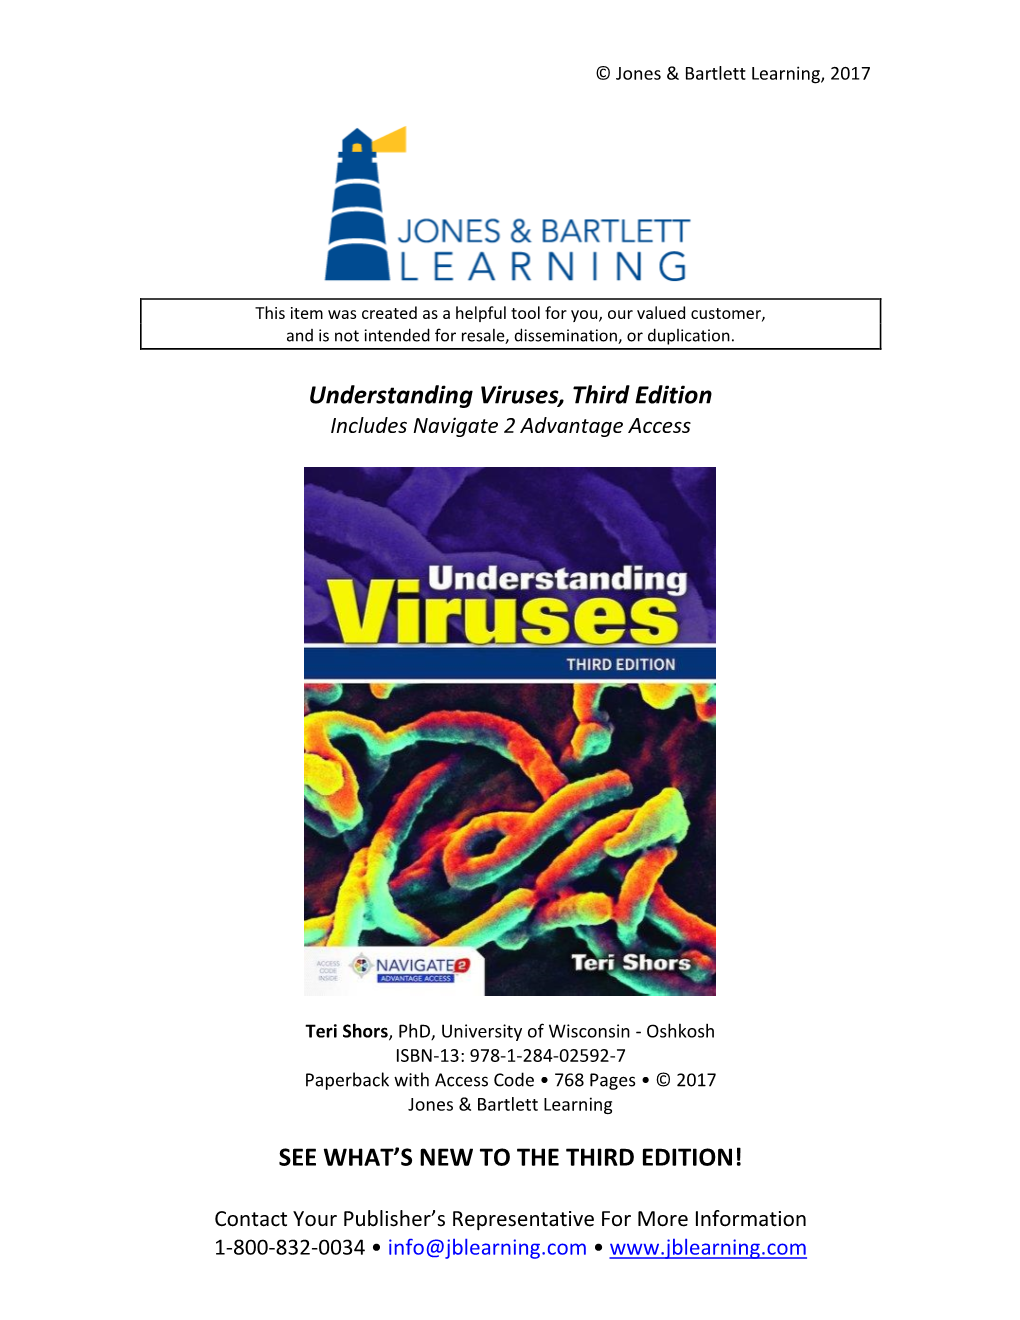 Understanding Viruses, Third Edition Includes Navigate 2 Advantage Access